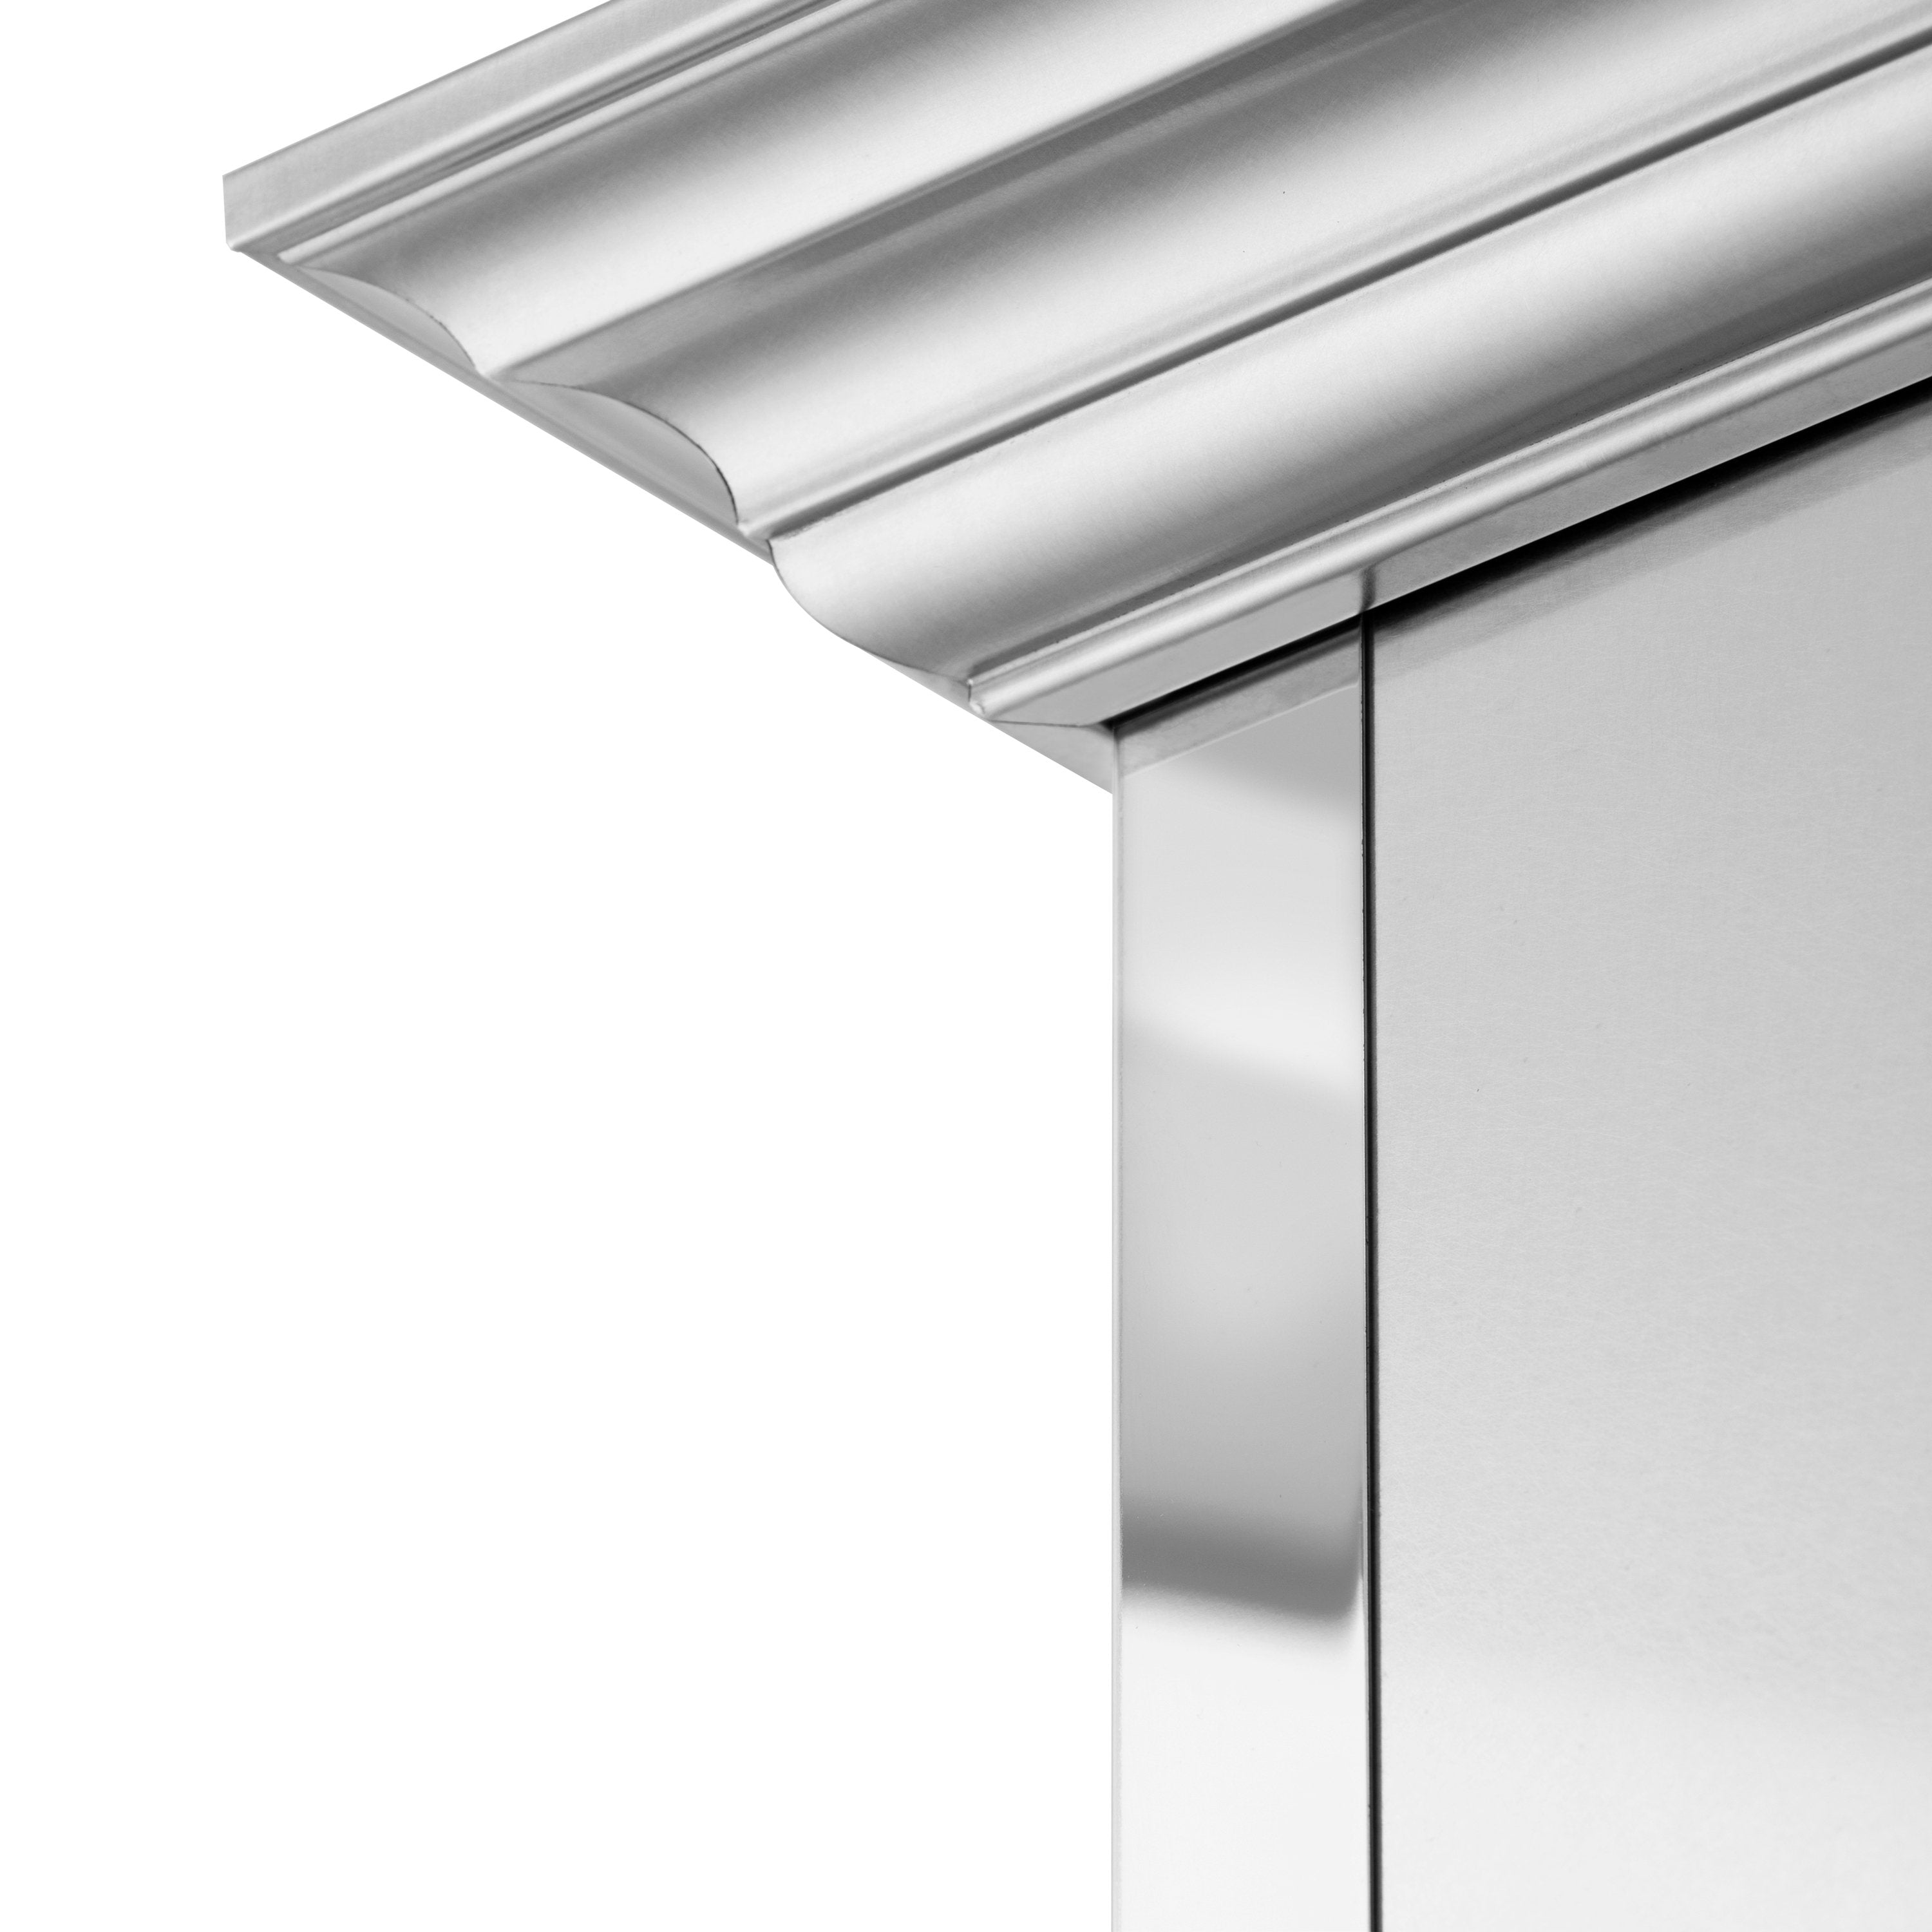 ZLINE 36" Designer Series Ducted Wall Mount Range Hood in Fingerprint Resistant Stainless Steel with Mirror Accents (655MR-36)